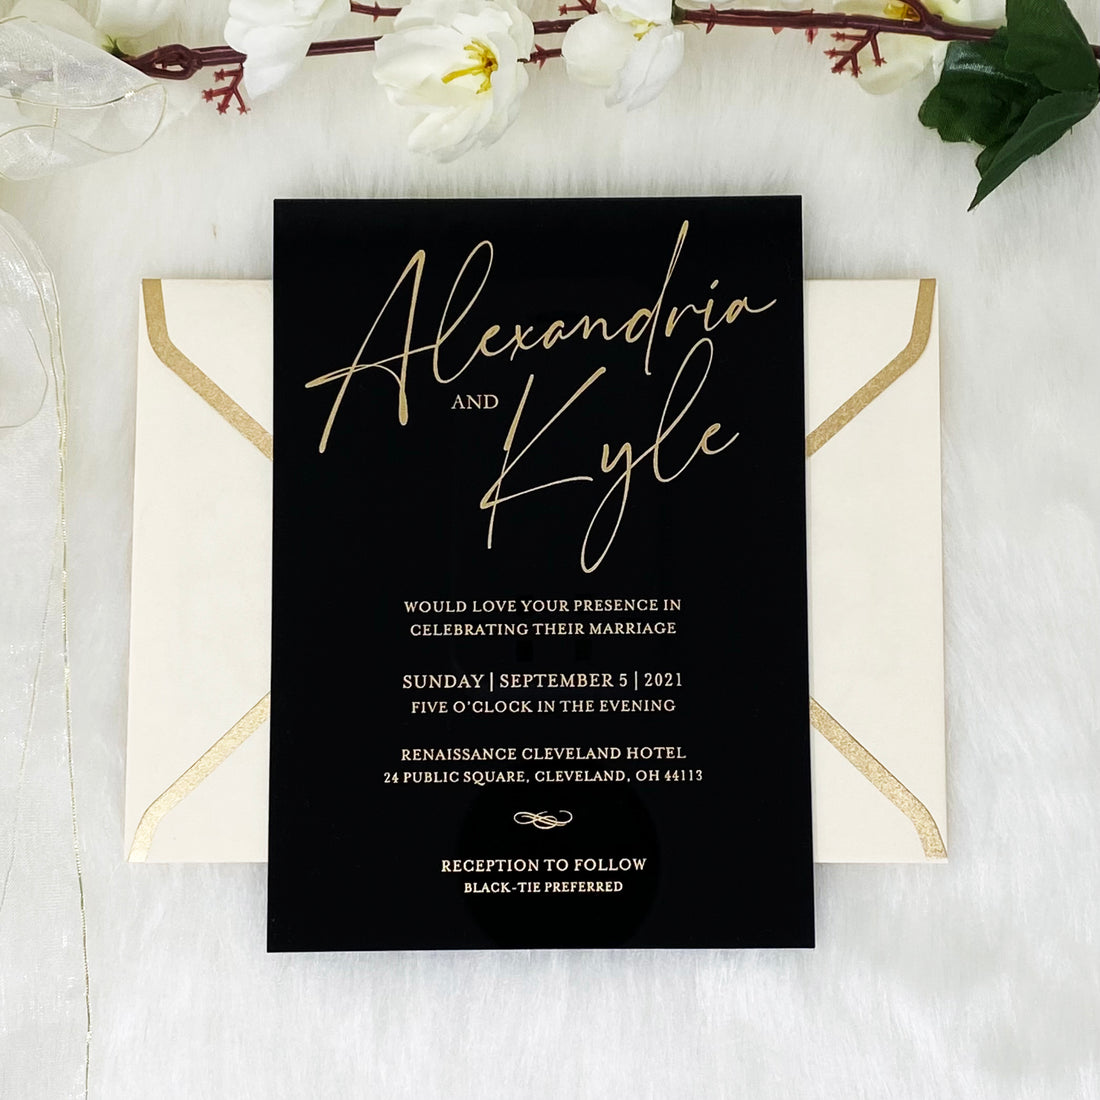 Rose Design Black Rigid Acrylic Wedding Invitation